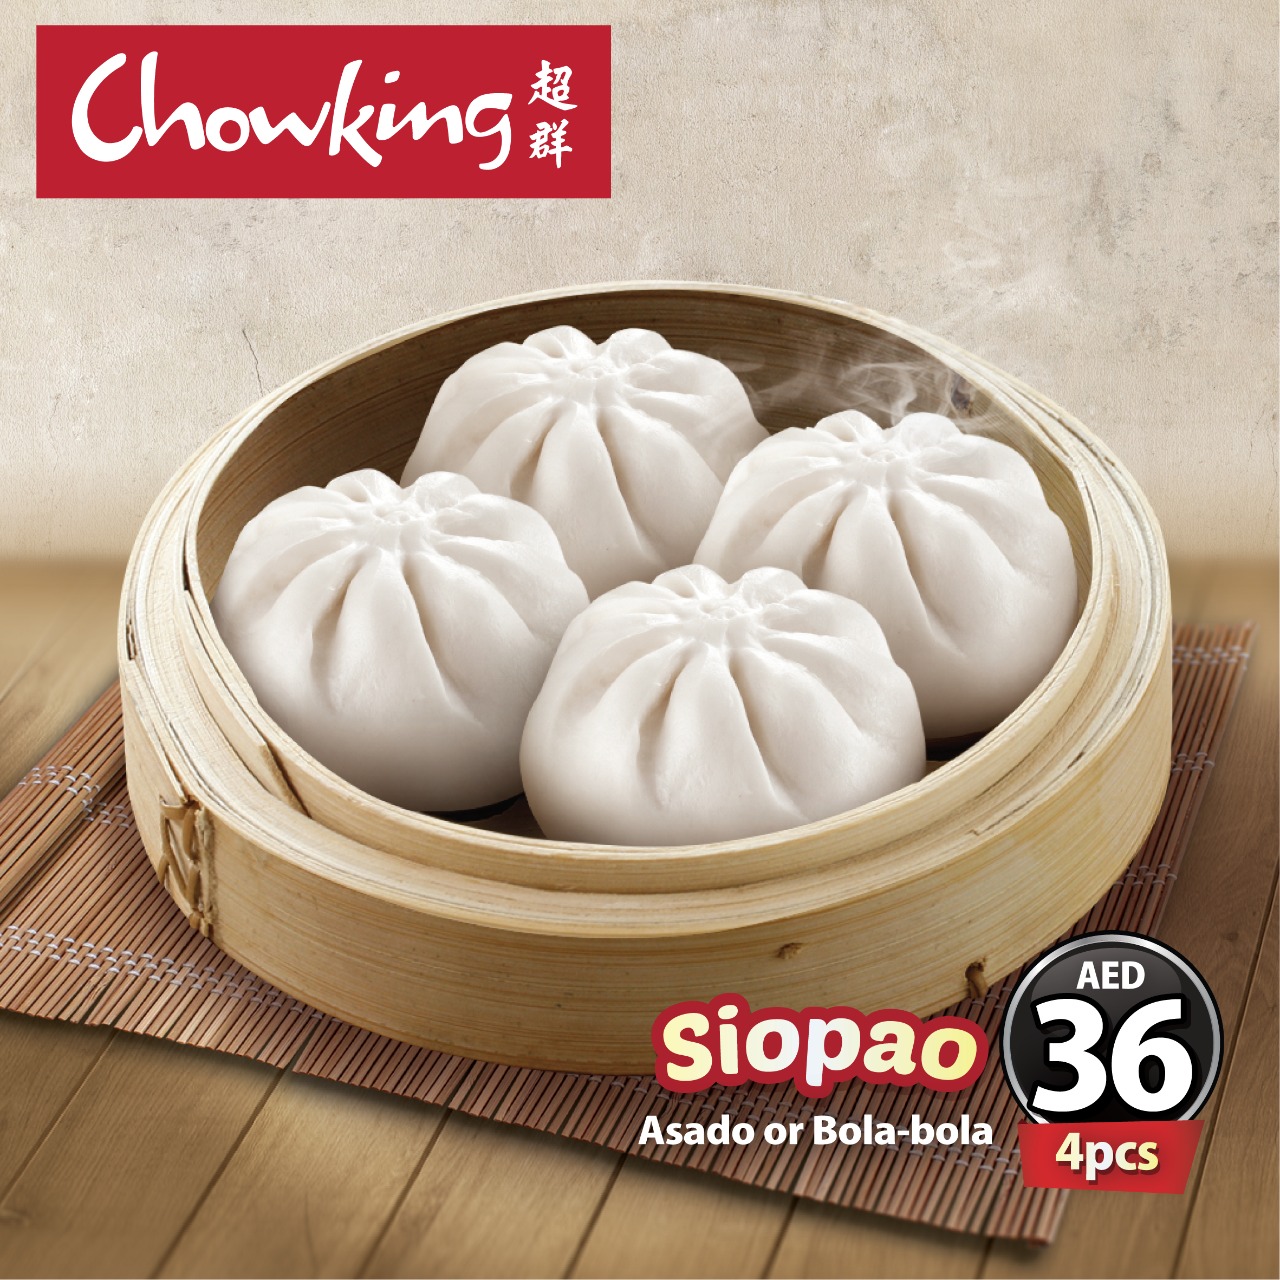 Chowking Chow to Go Siopao